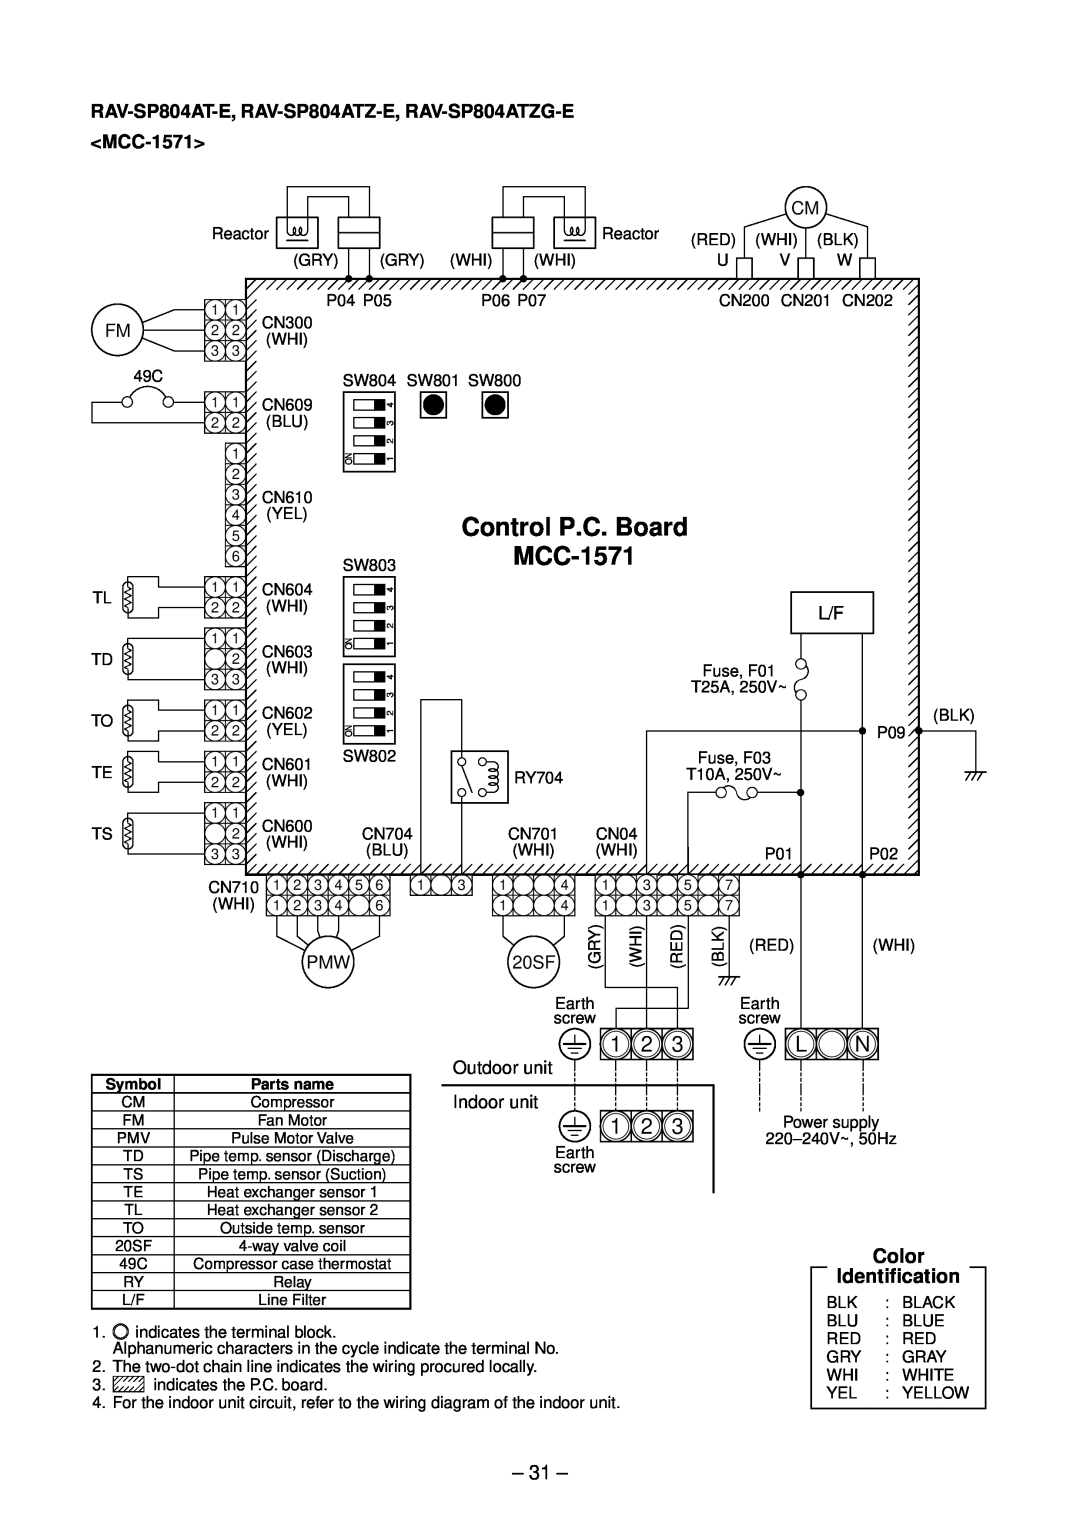 Toshiba RAV-SP564ATZ-E MCC-1571, Control P.C. Board, Color, Identification, RAV-SP804AT-E, RAV-SP804ATZ-E, RAV-SP804ATZG-E 